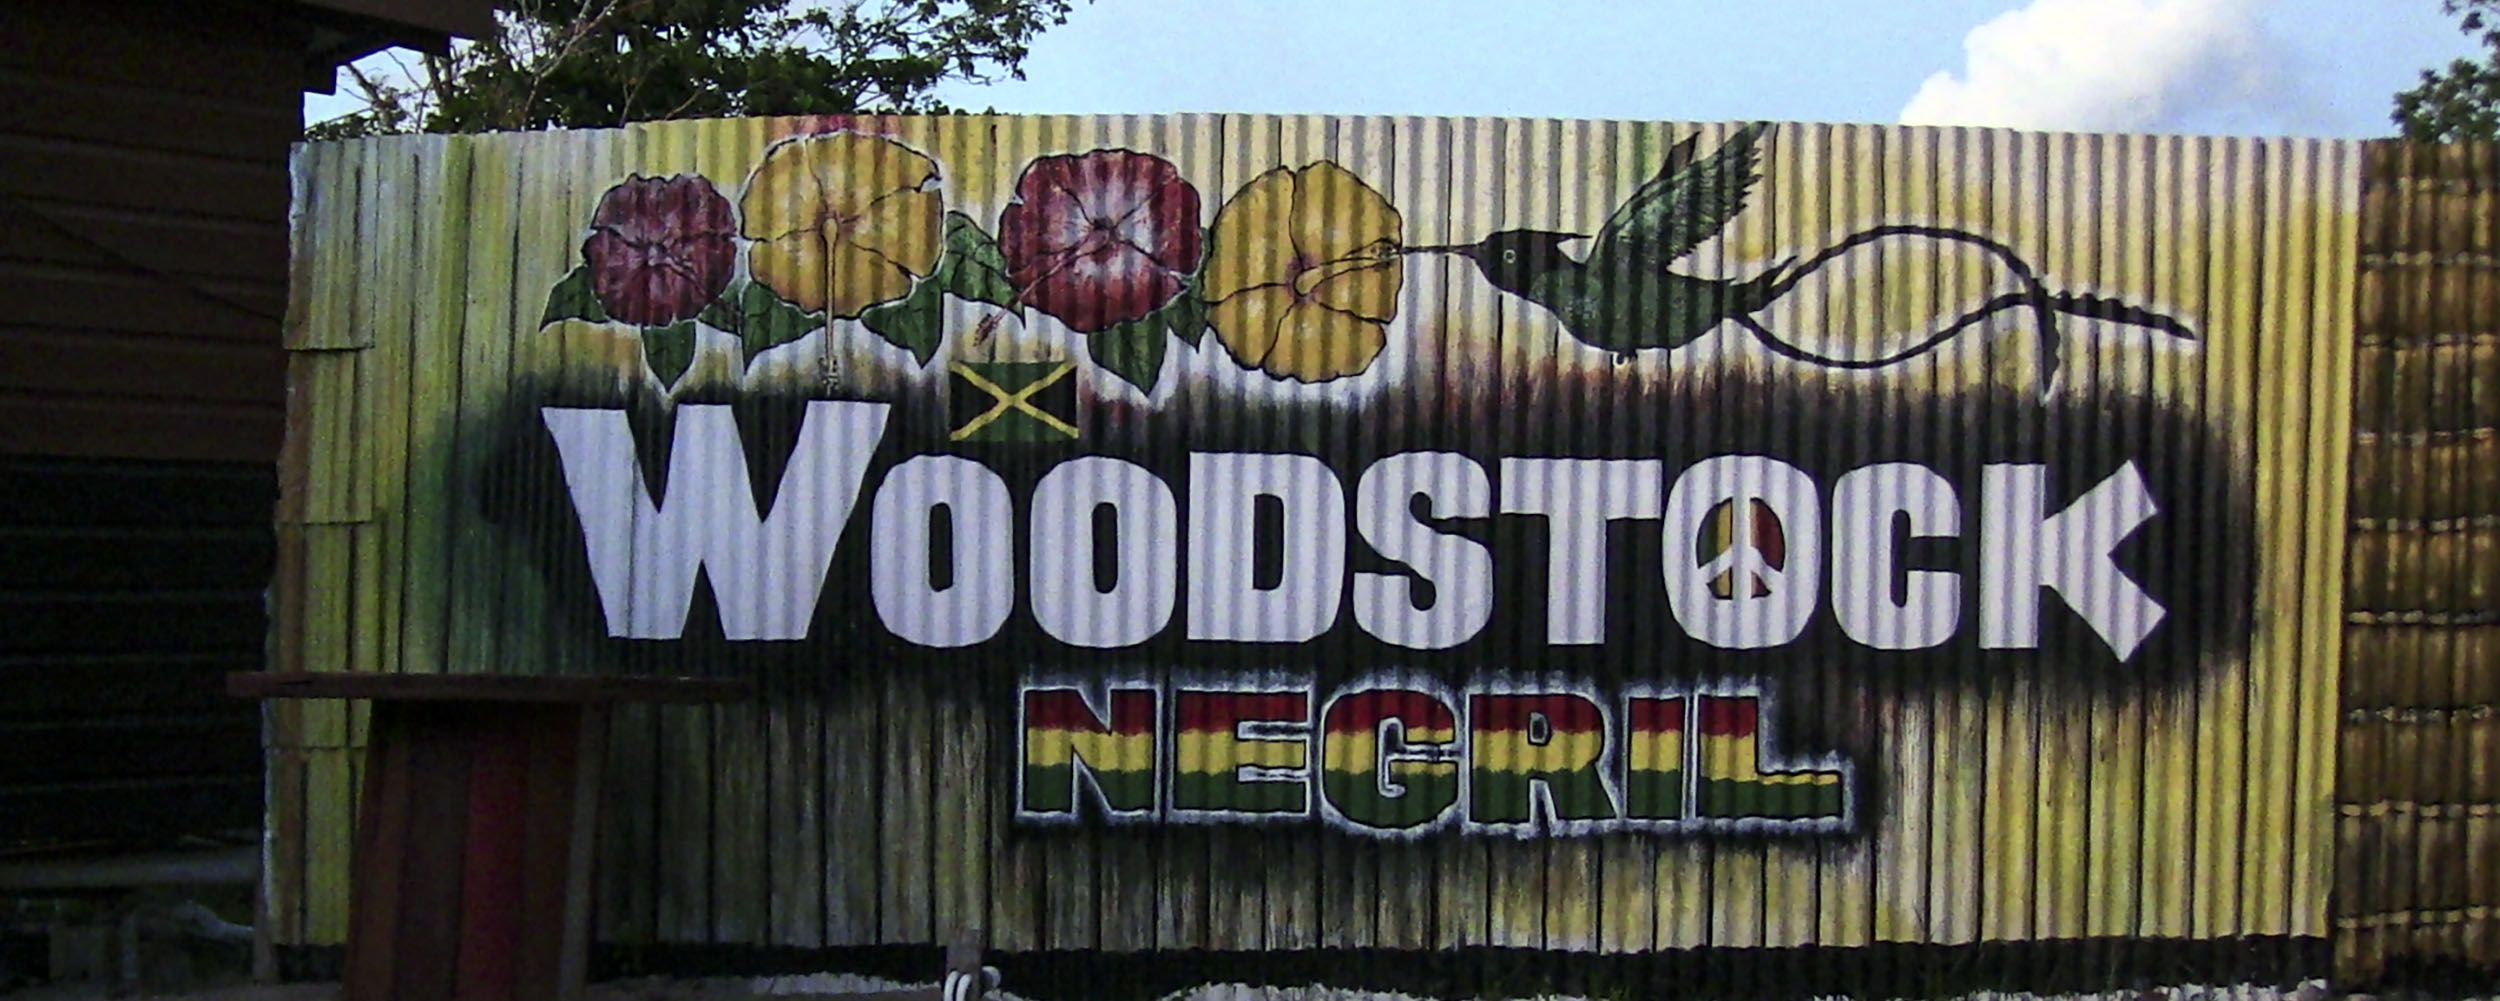 Woodstock Negril, Norman Manley Boulevard, Negril Jamaica